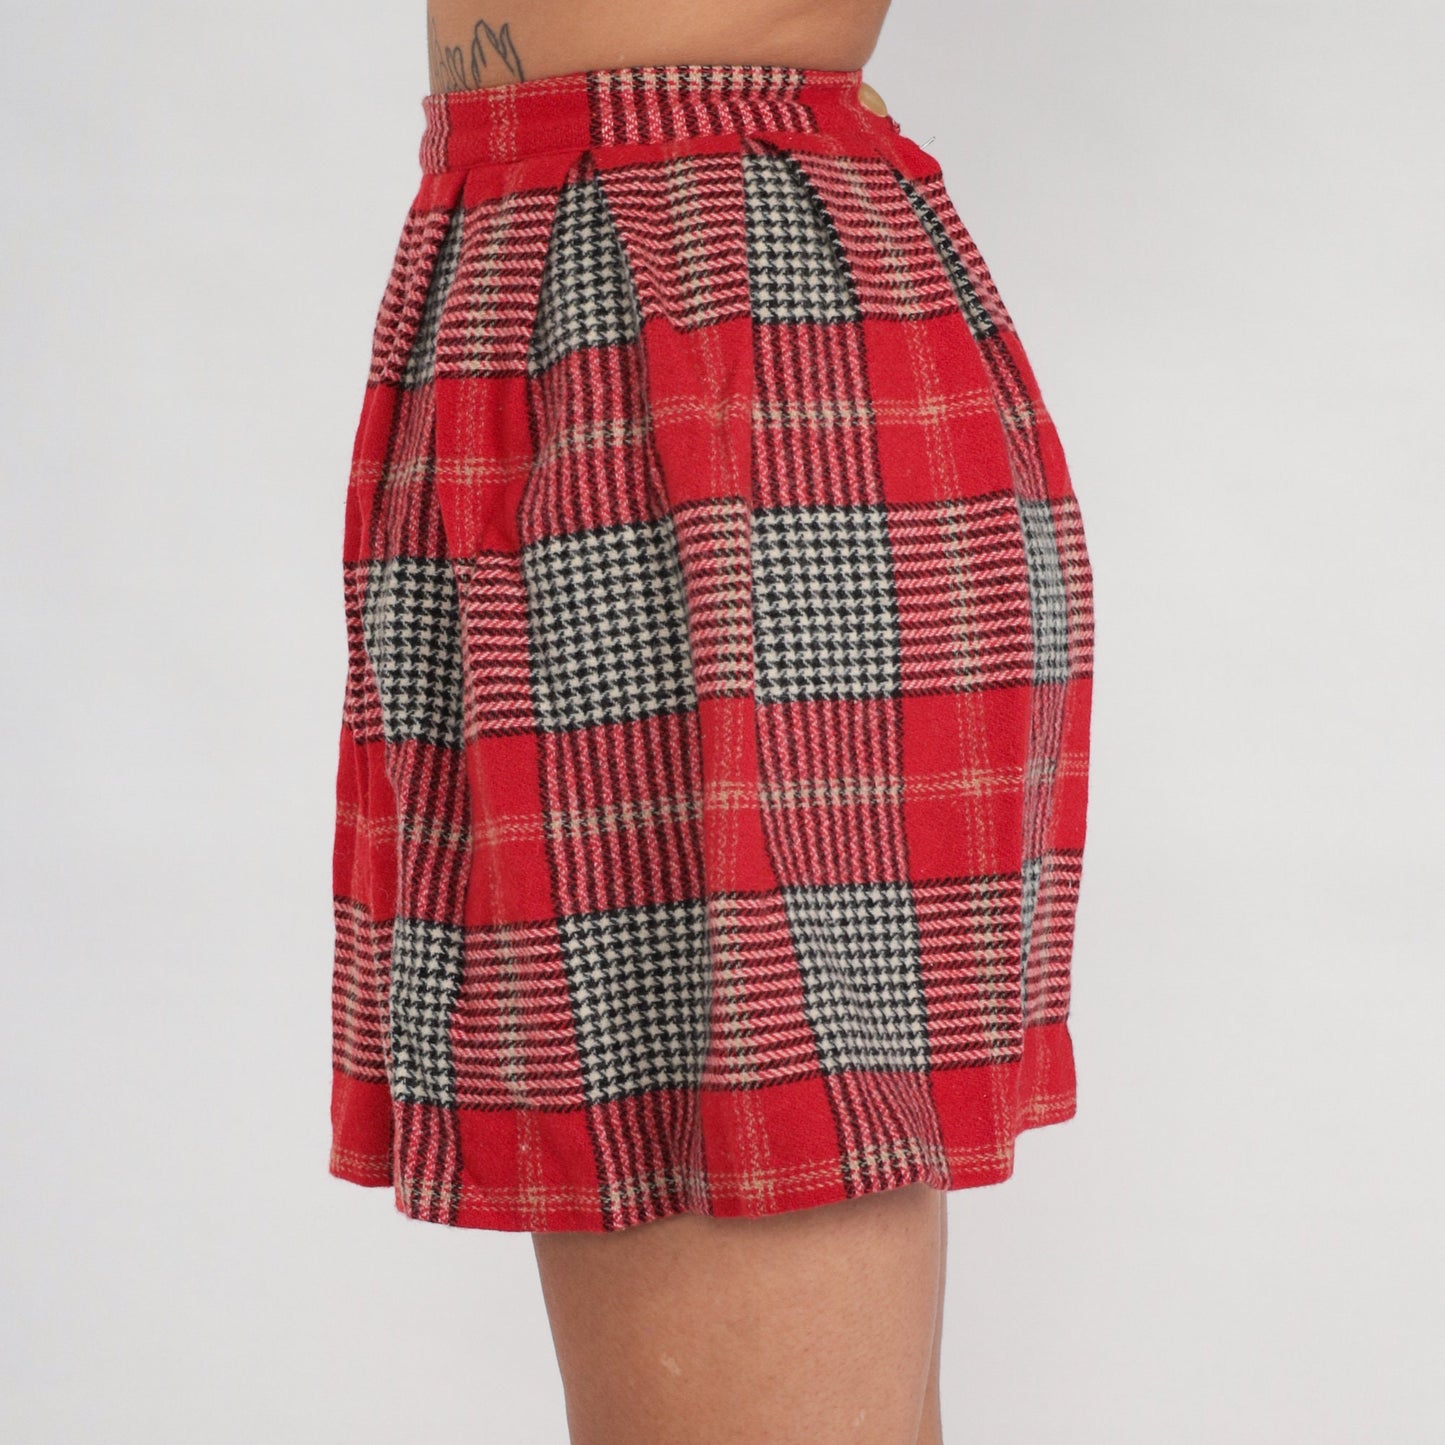 60s Mini Skirt Red Plaid Skirt Houndstooth Retro School Girl Skirt Pleated High Waist Preppy Checkered Black Vintage 1960s Extra Small xs